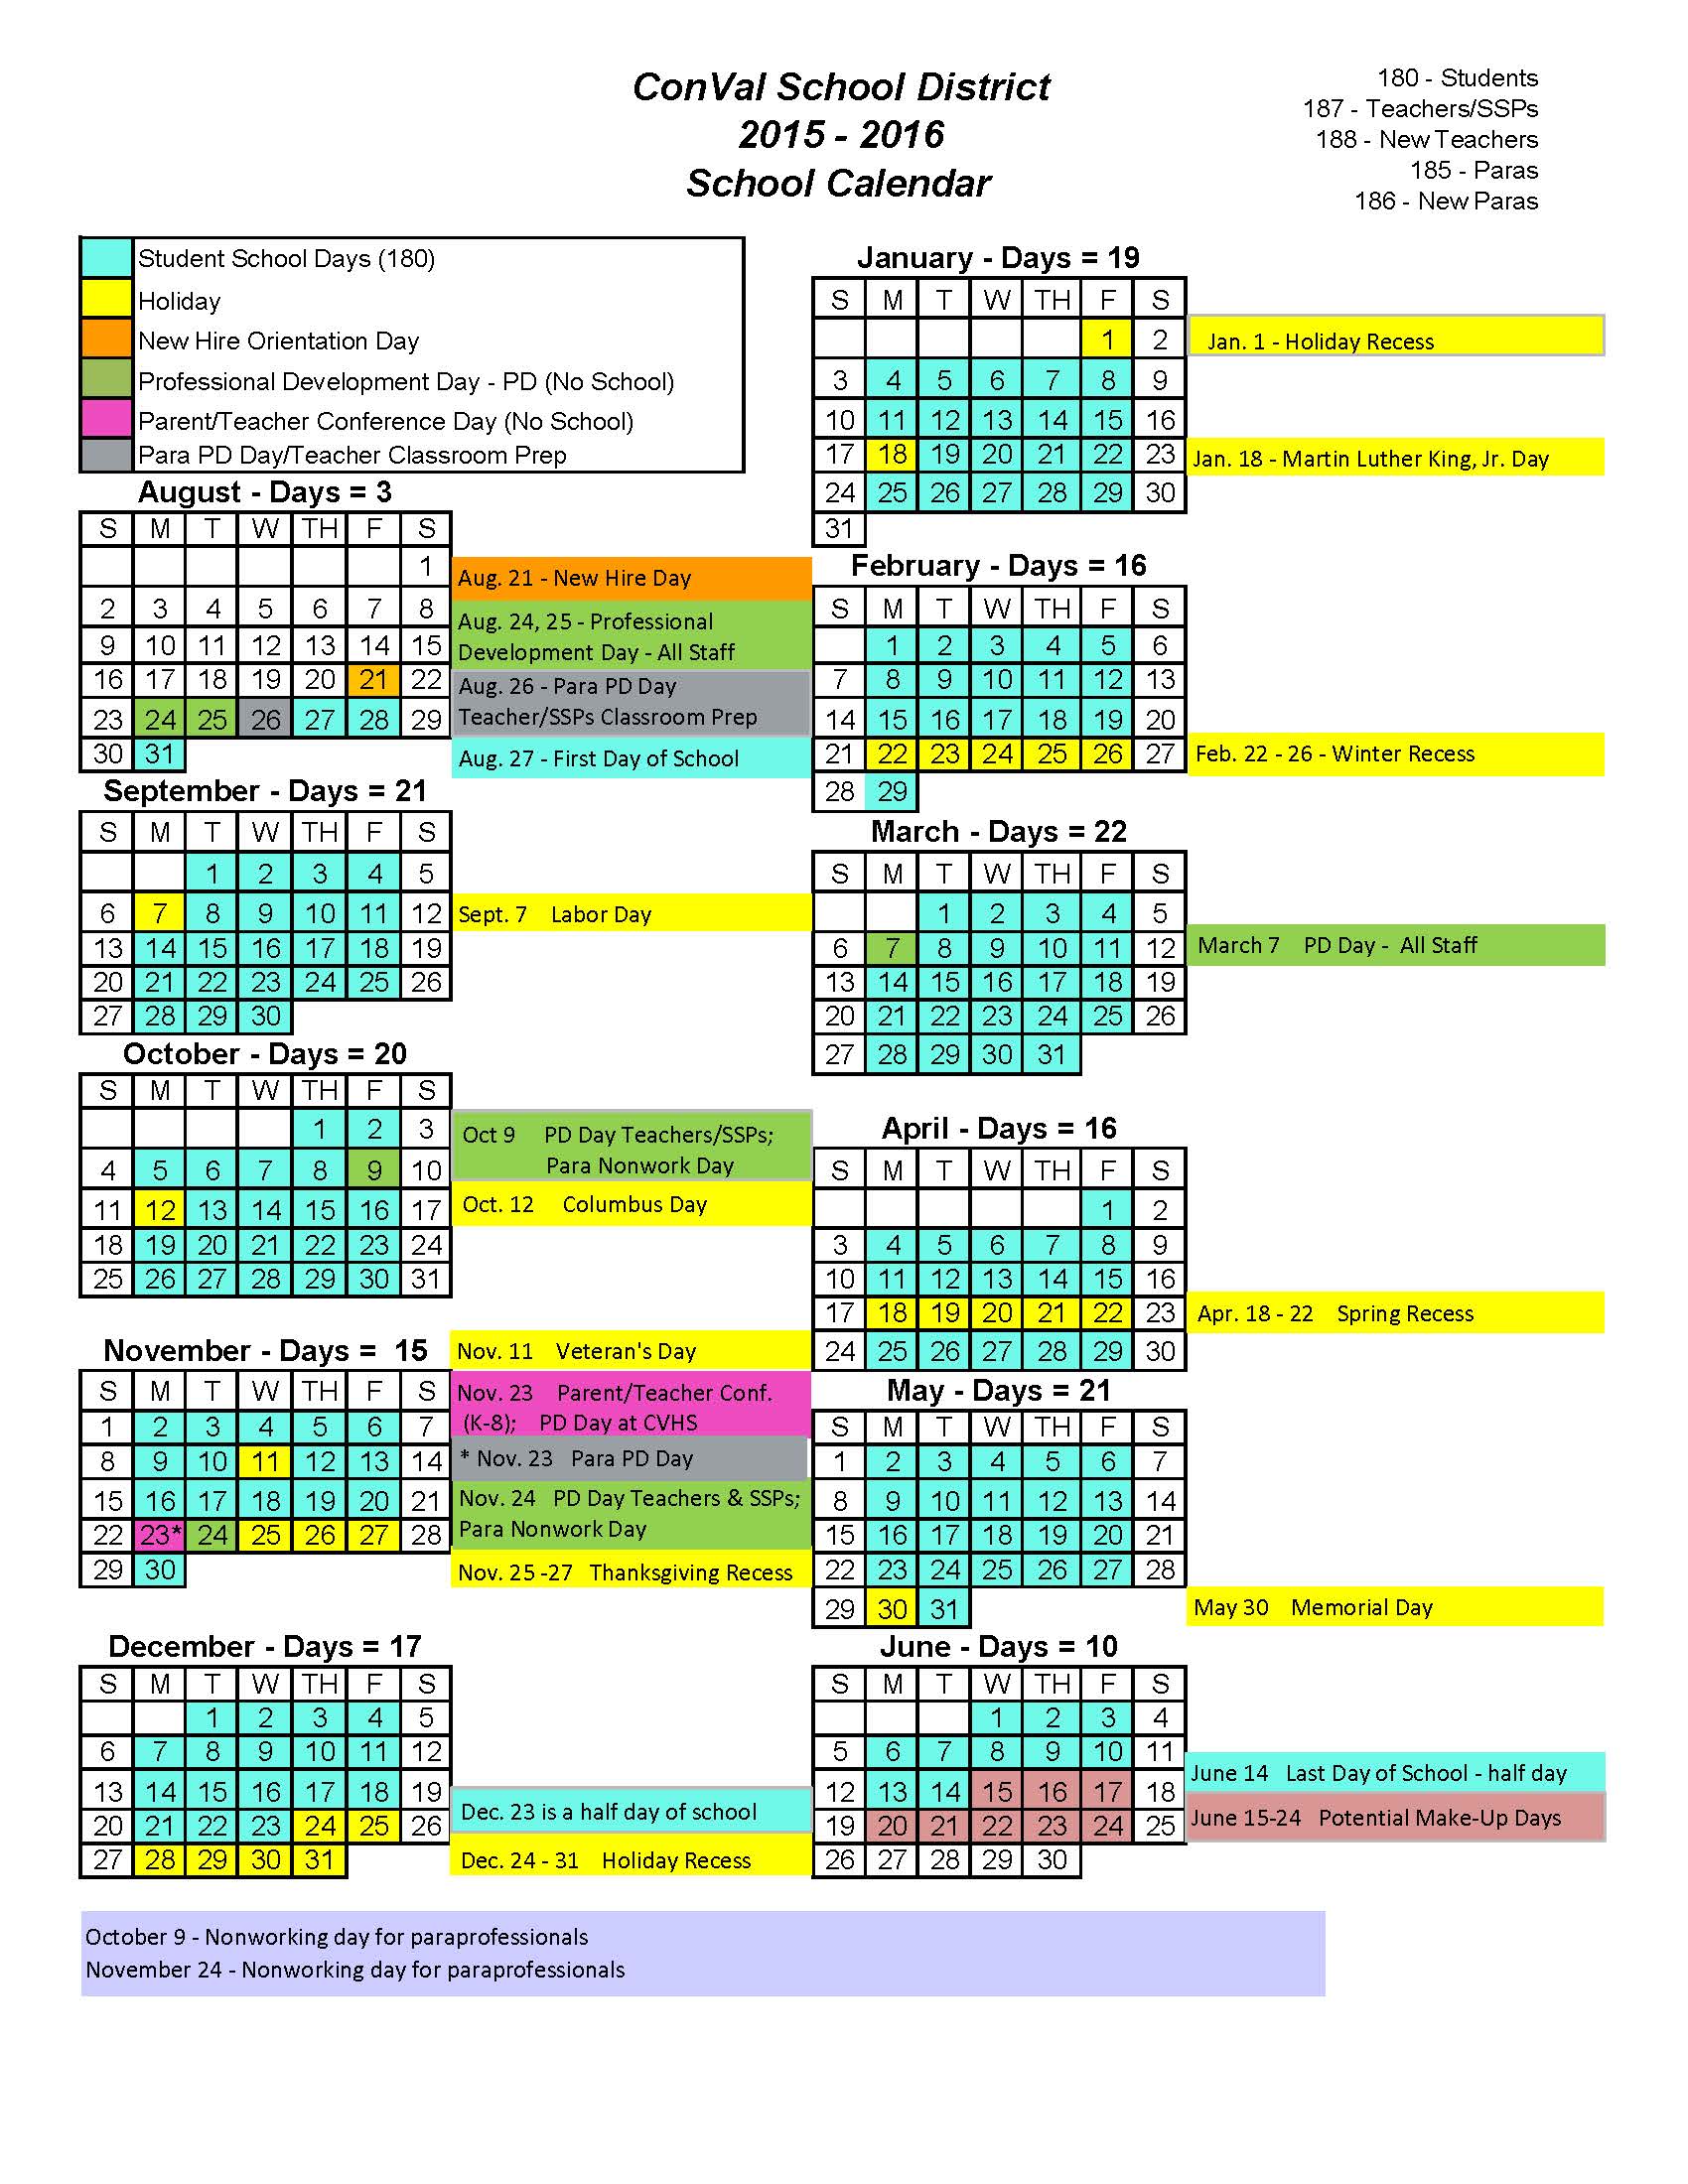 Snhu Academic Calendar